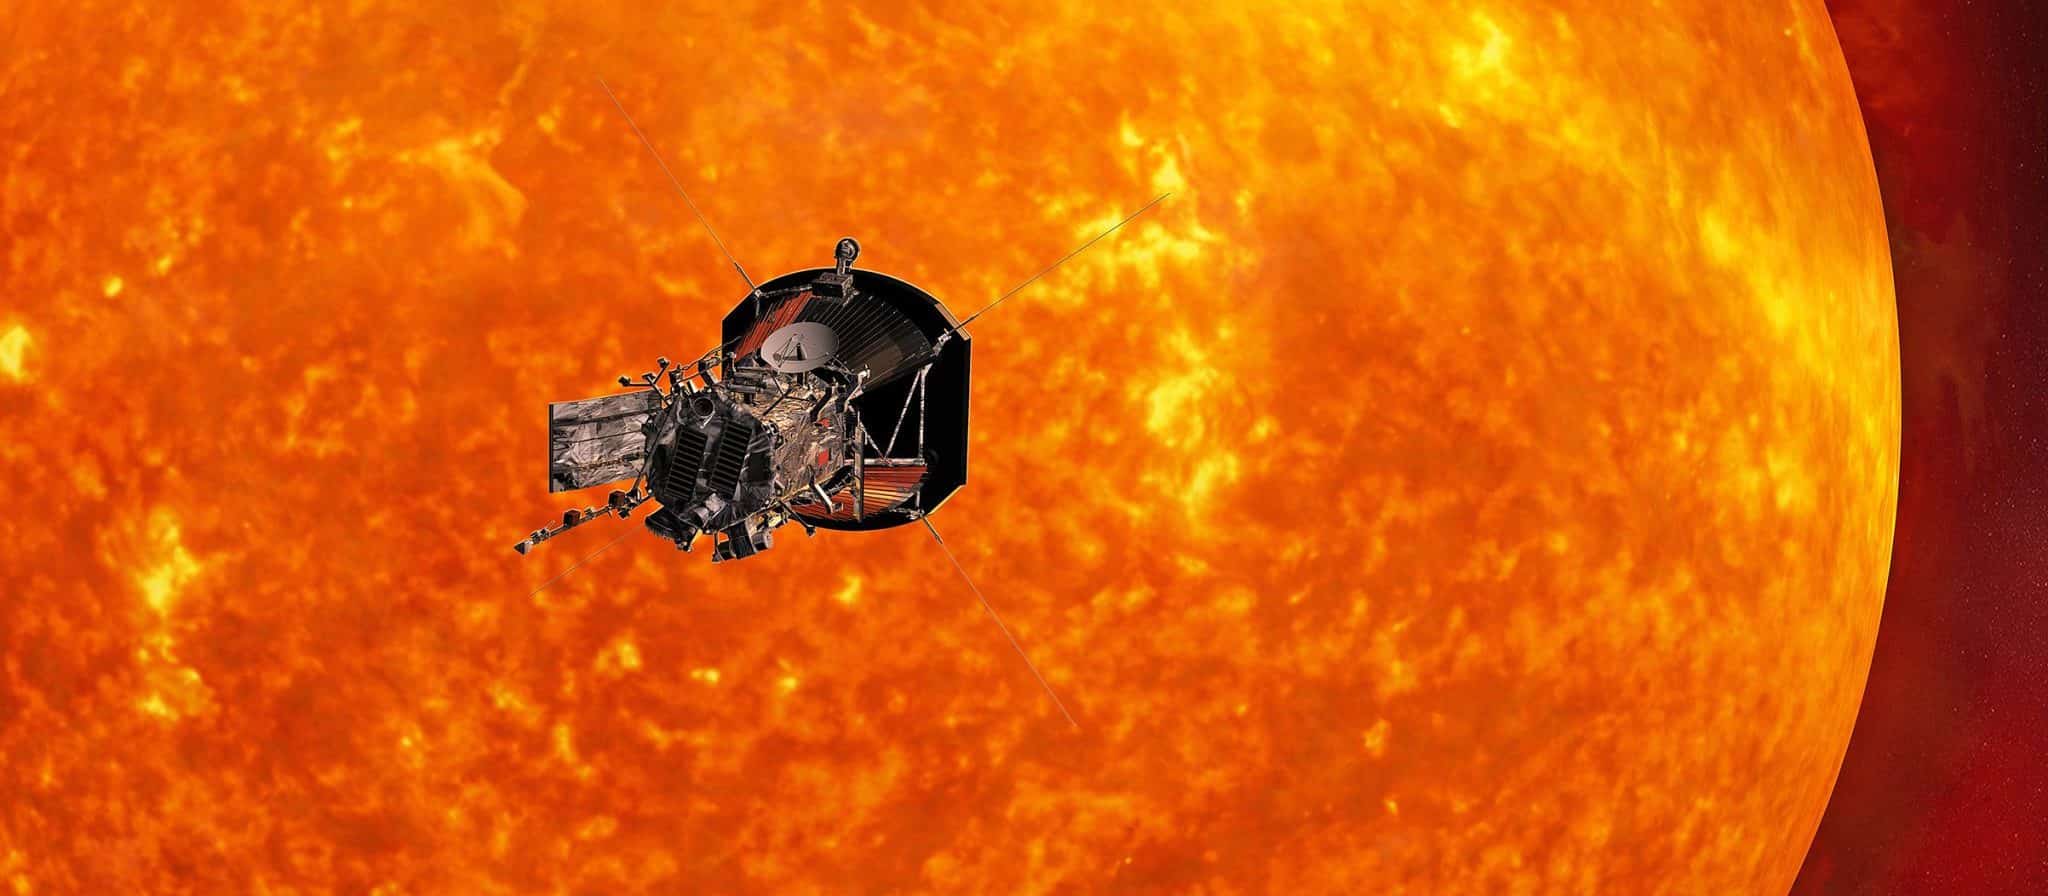 Nasa Hopes Make History With Latest Mission Sun E1534253517452 مجلة نقطة العلمية